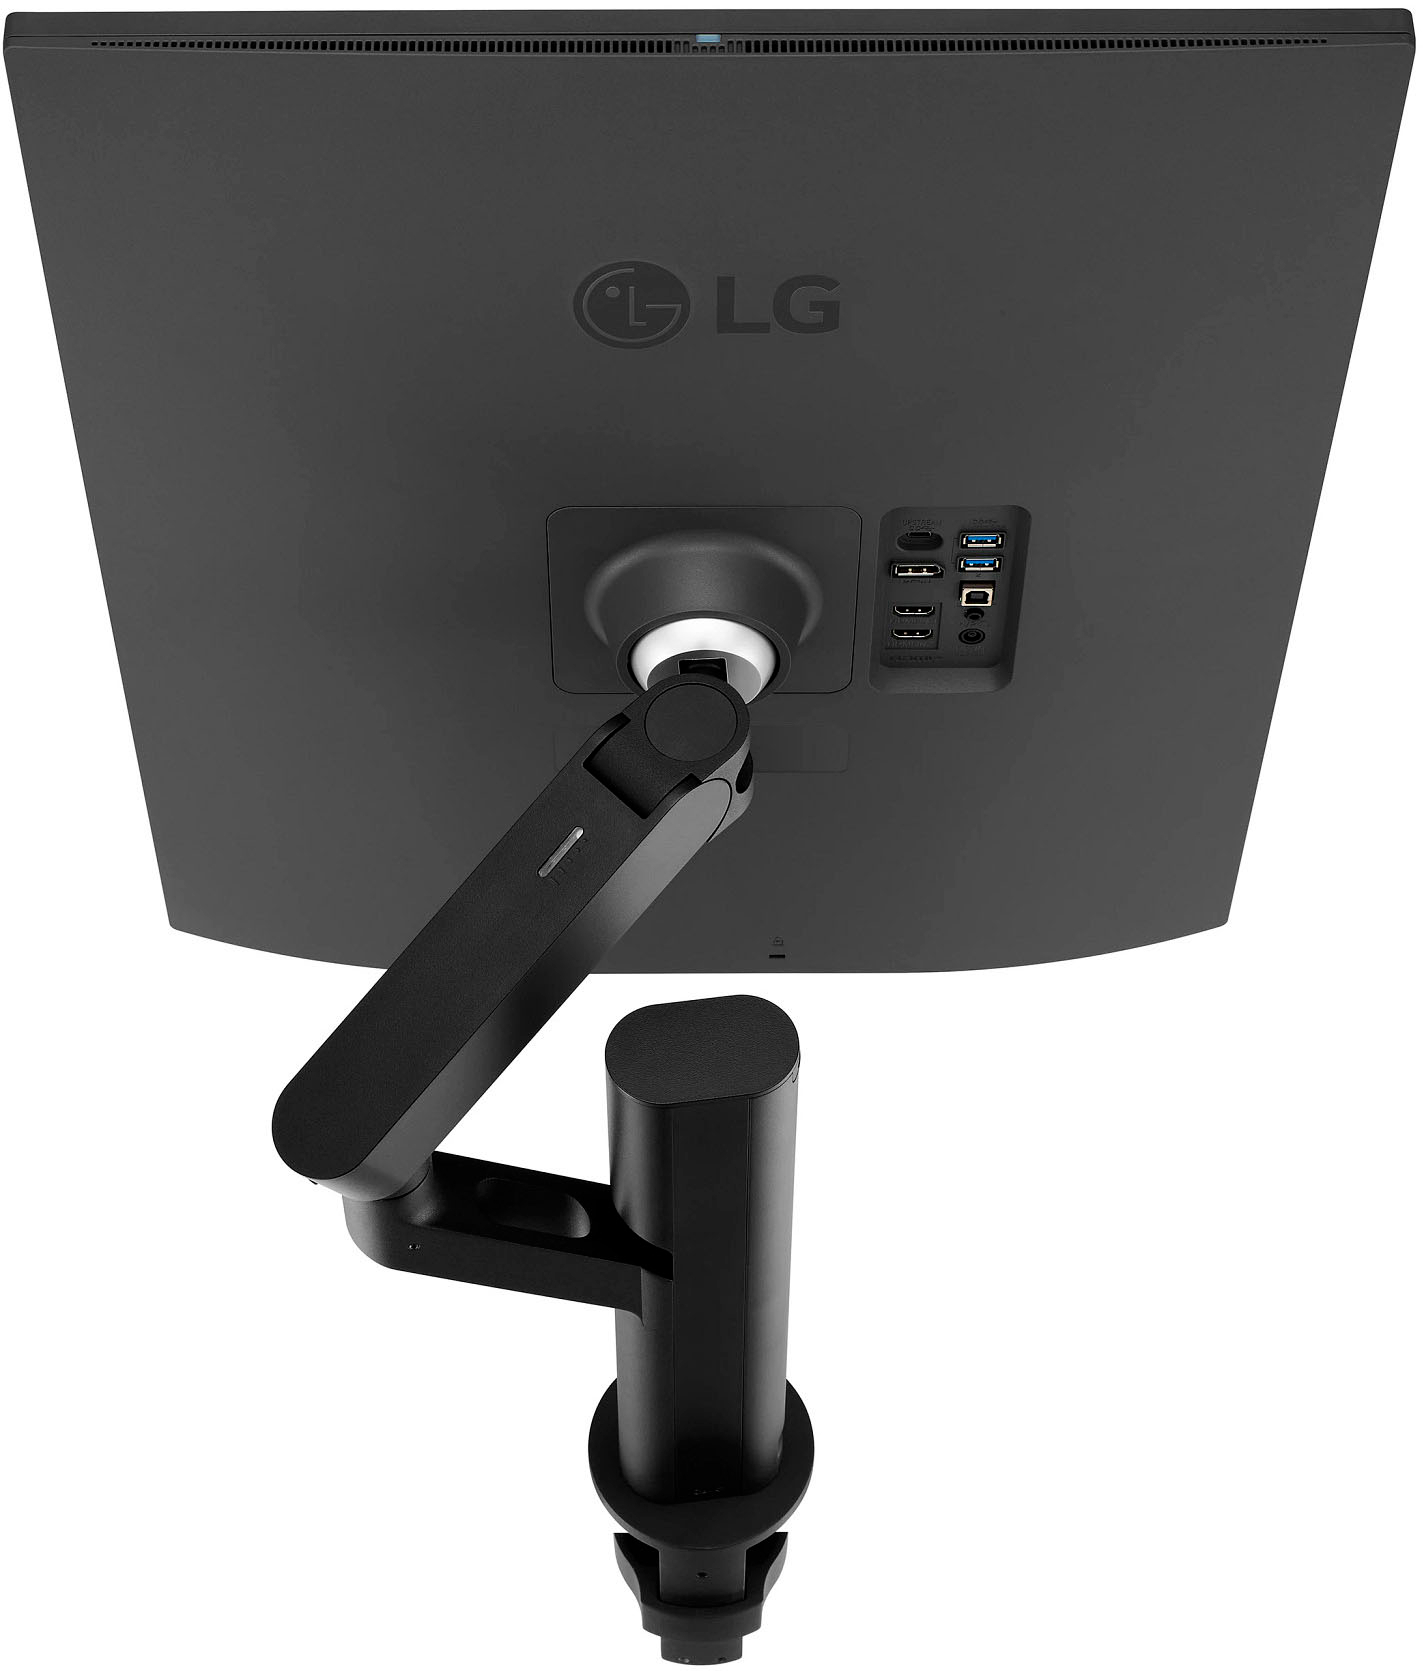 LG 28 Class LED 720p HDTV 28LJ400B-PU - Best Buy